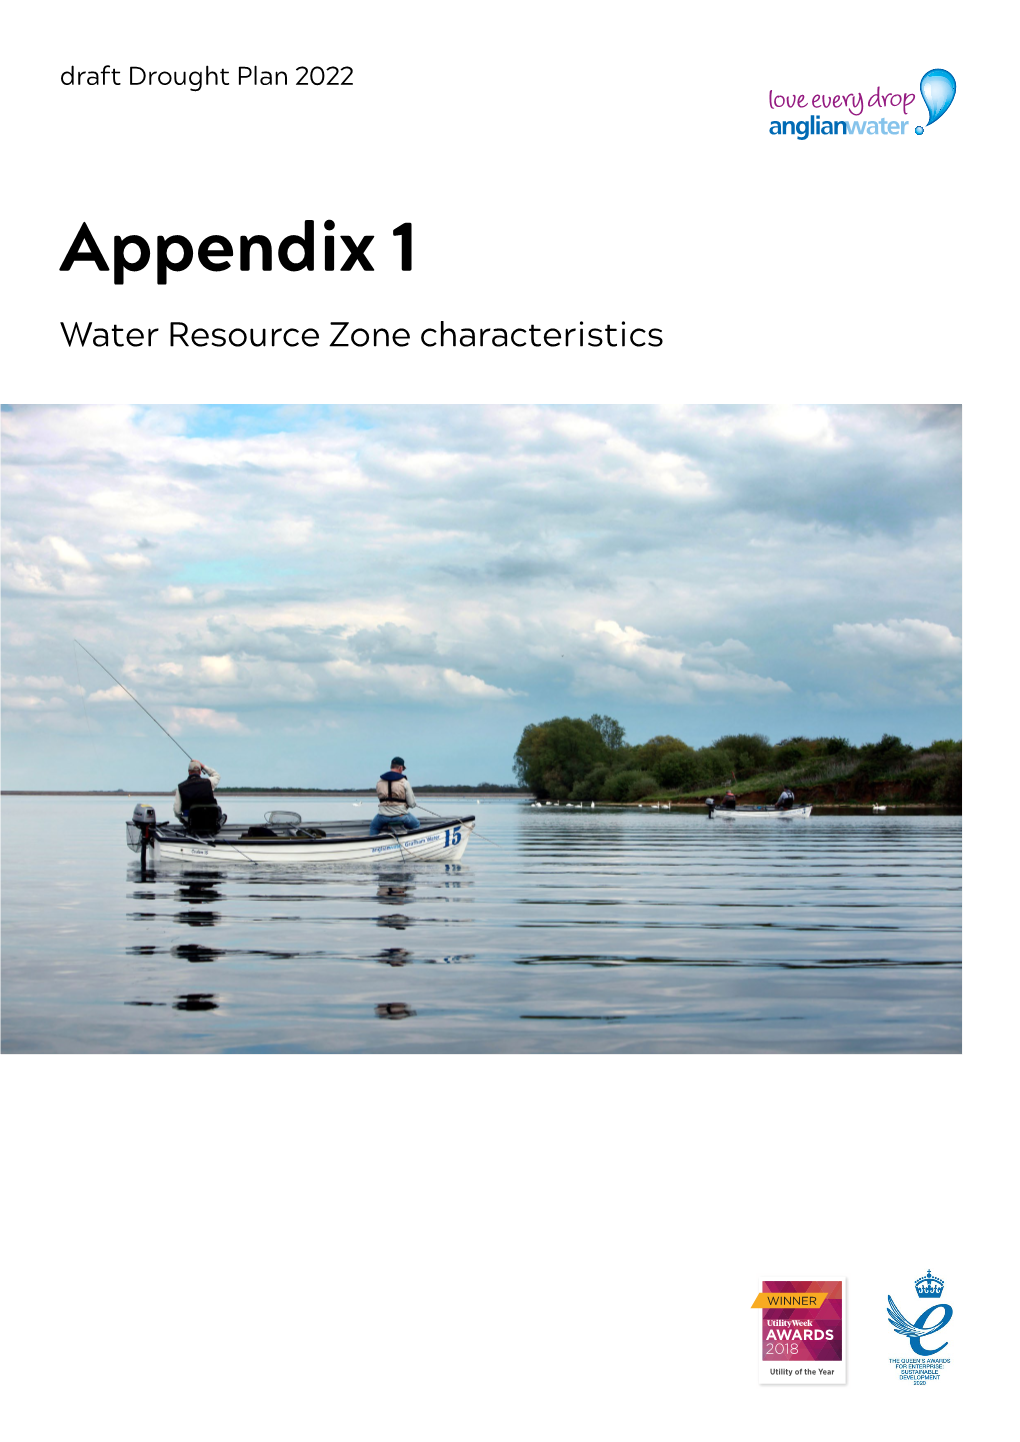 Appendix 1 Water Resource Zone Characteristics Contents